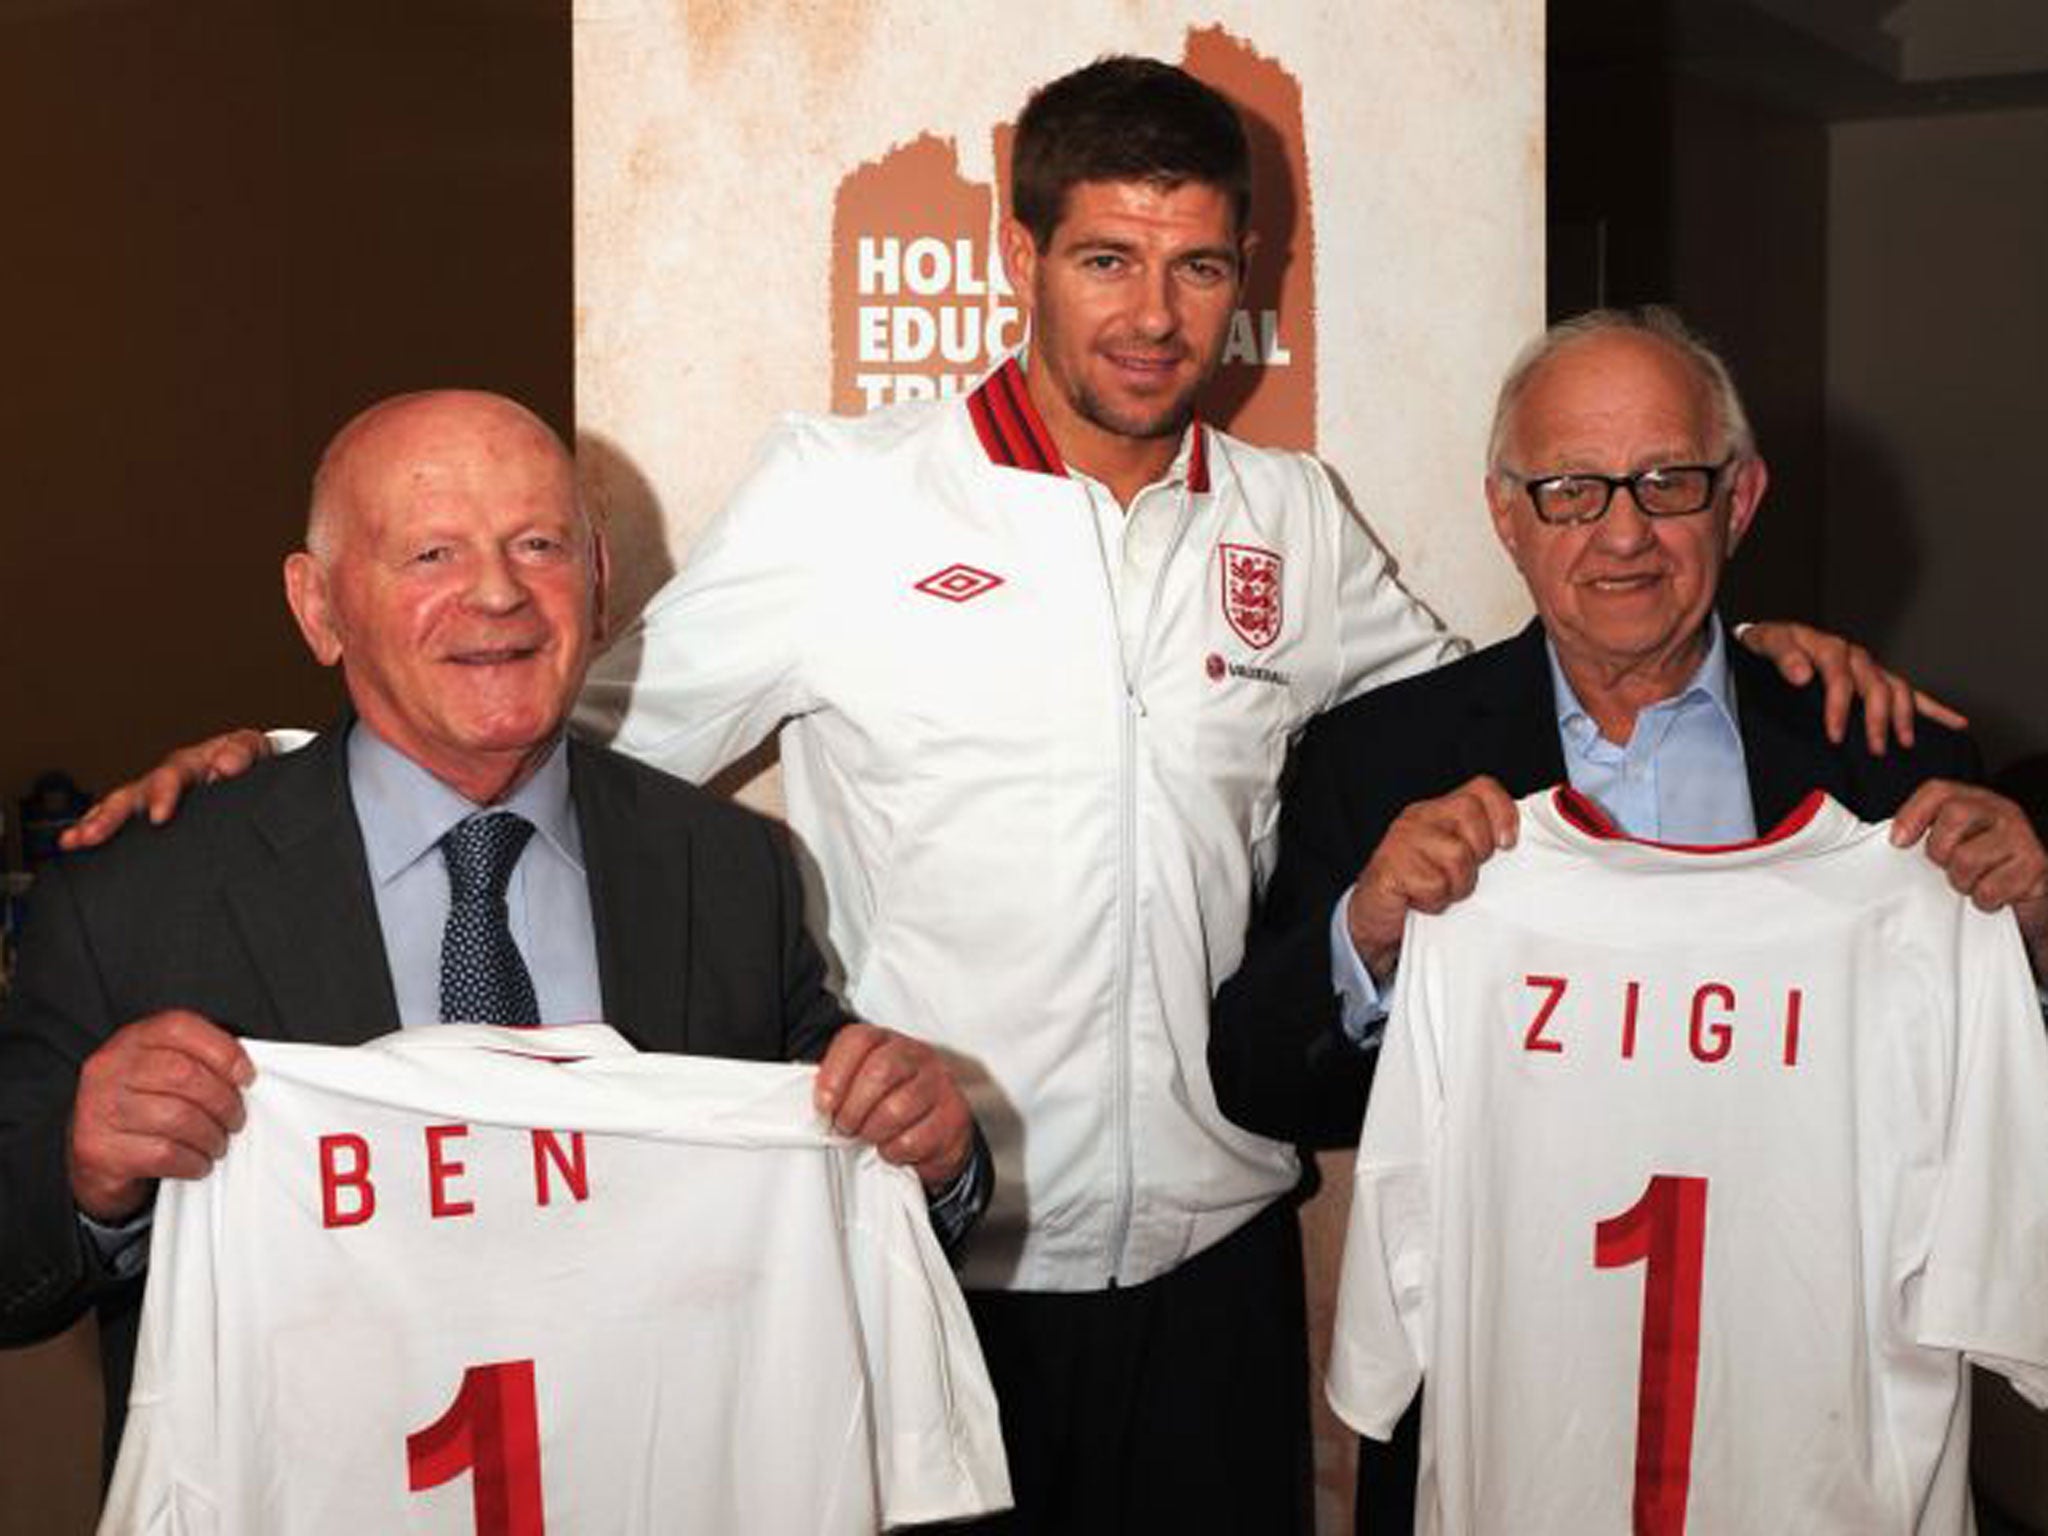 Holocaust survivor Zigi Shipper (right) with England’s Steven Gerrard